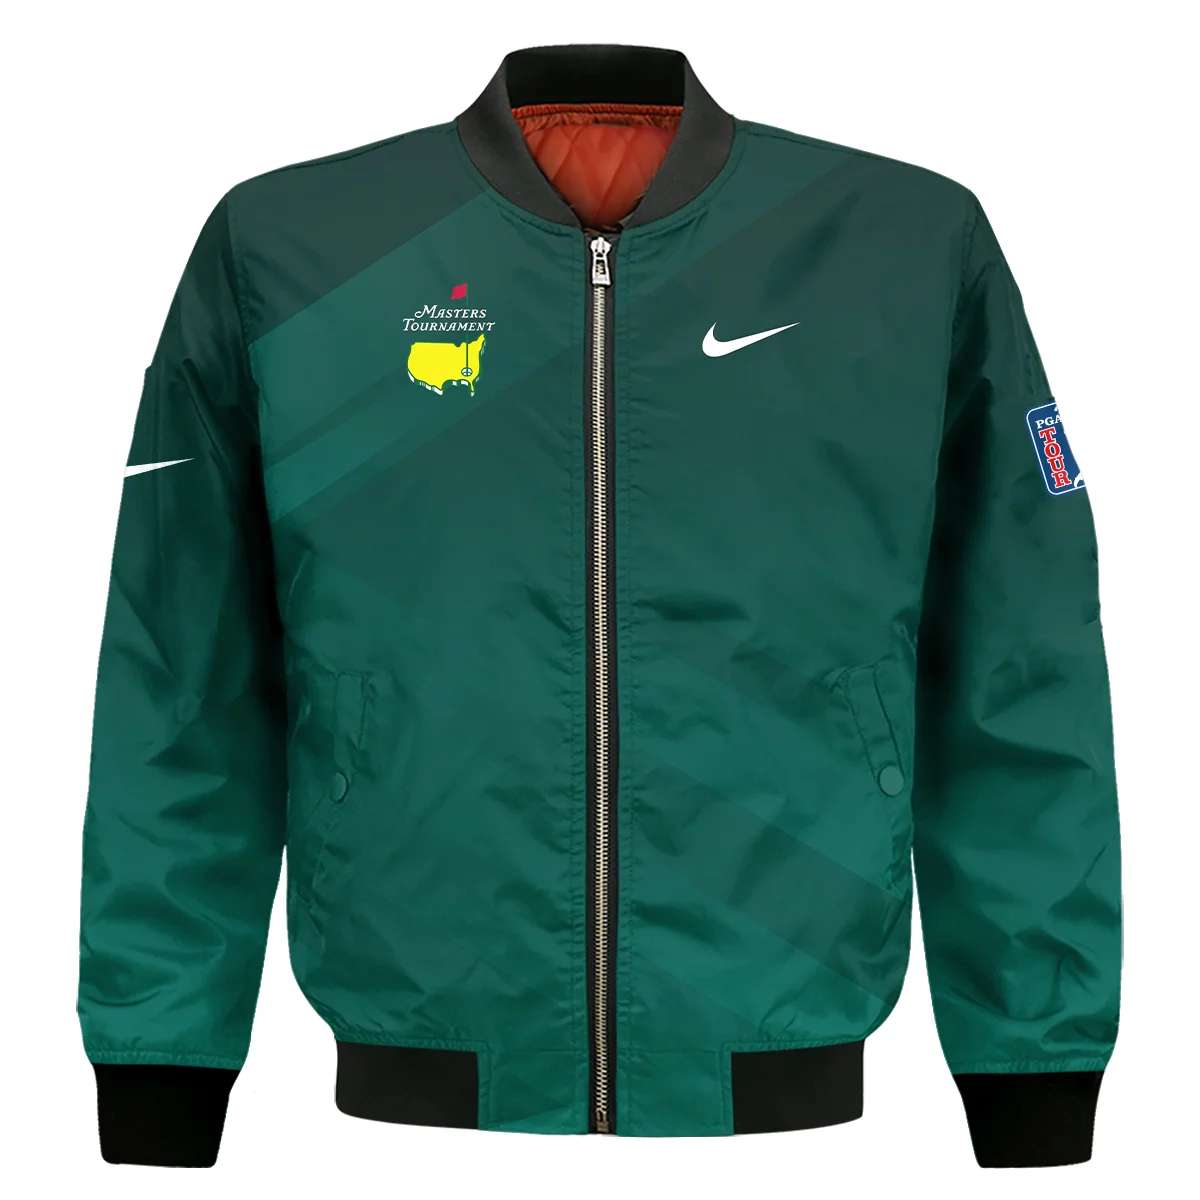 Masters Tournament Dark Green Gradient Golf Sport Nike Bomber Jacket Style Classic Bomber Jacket